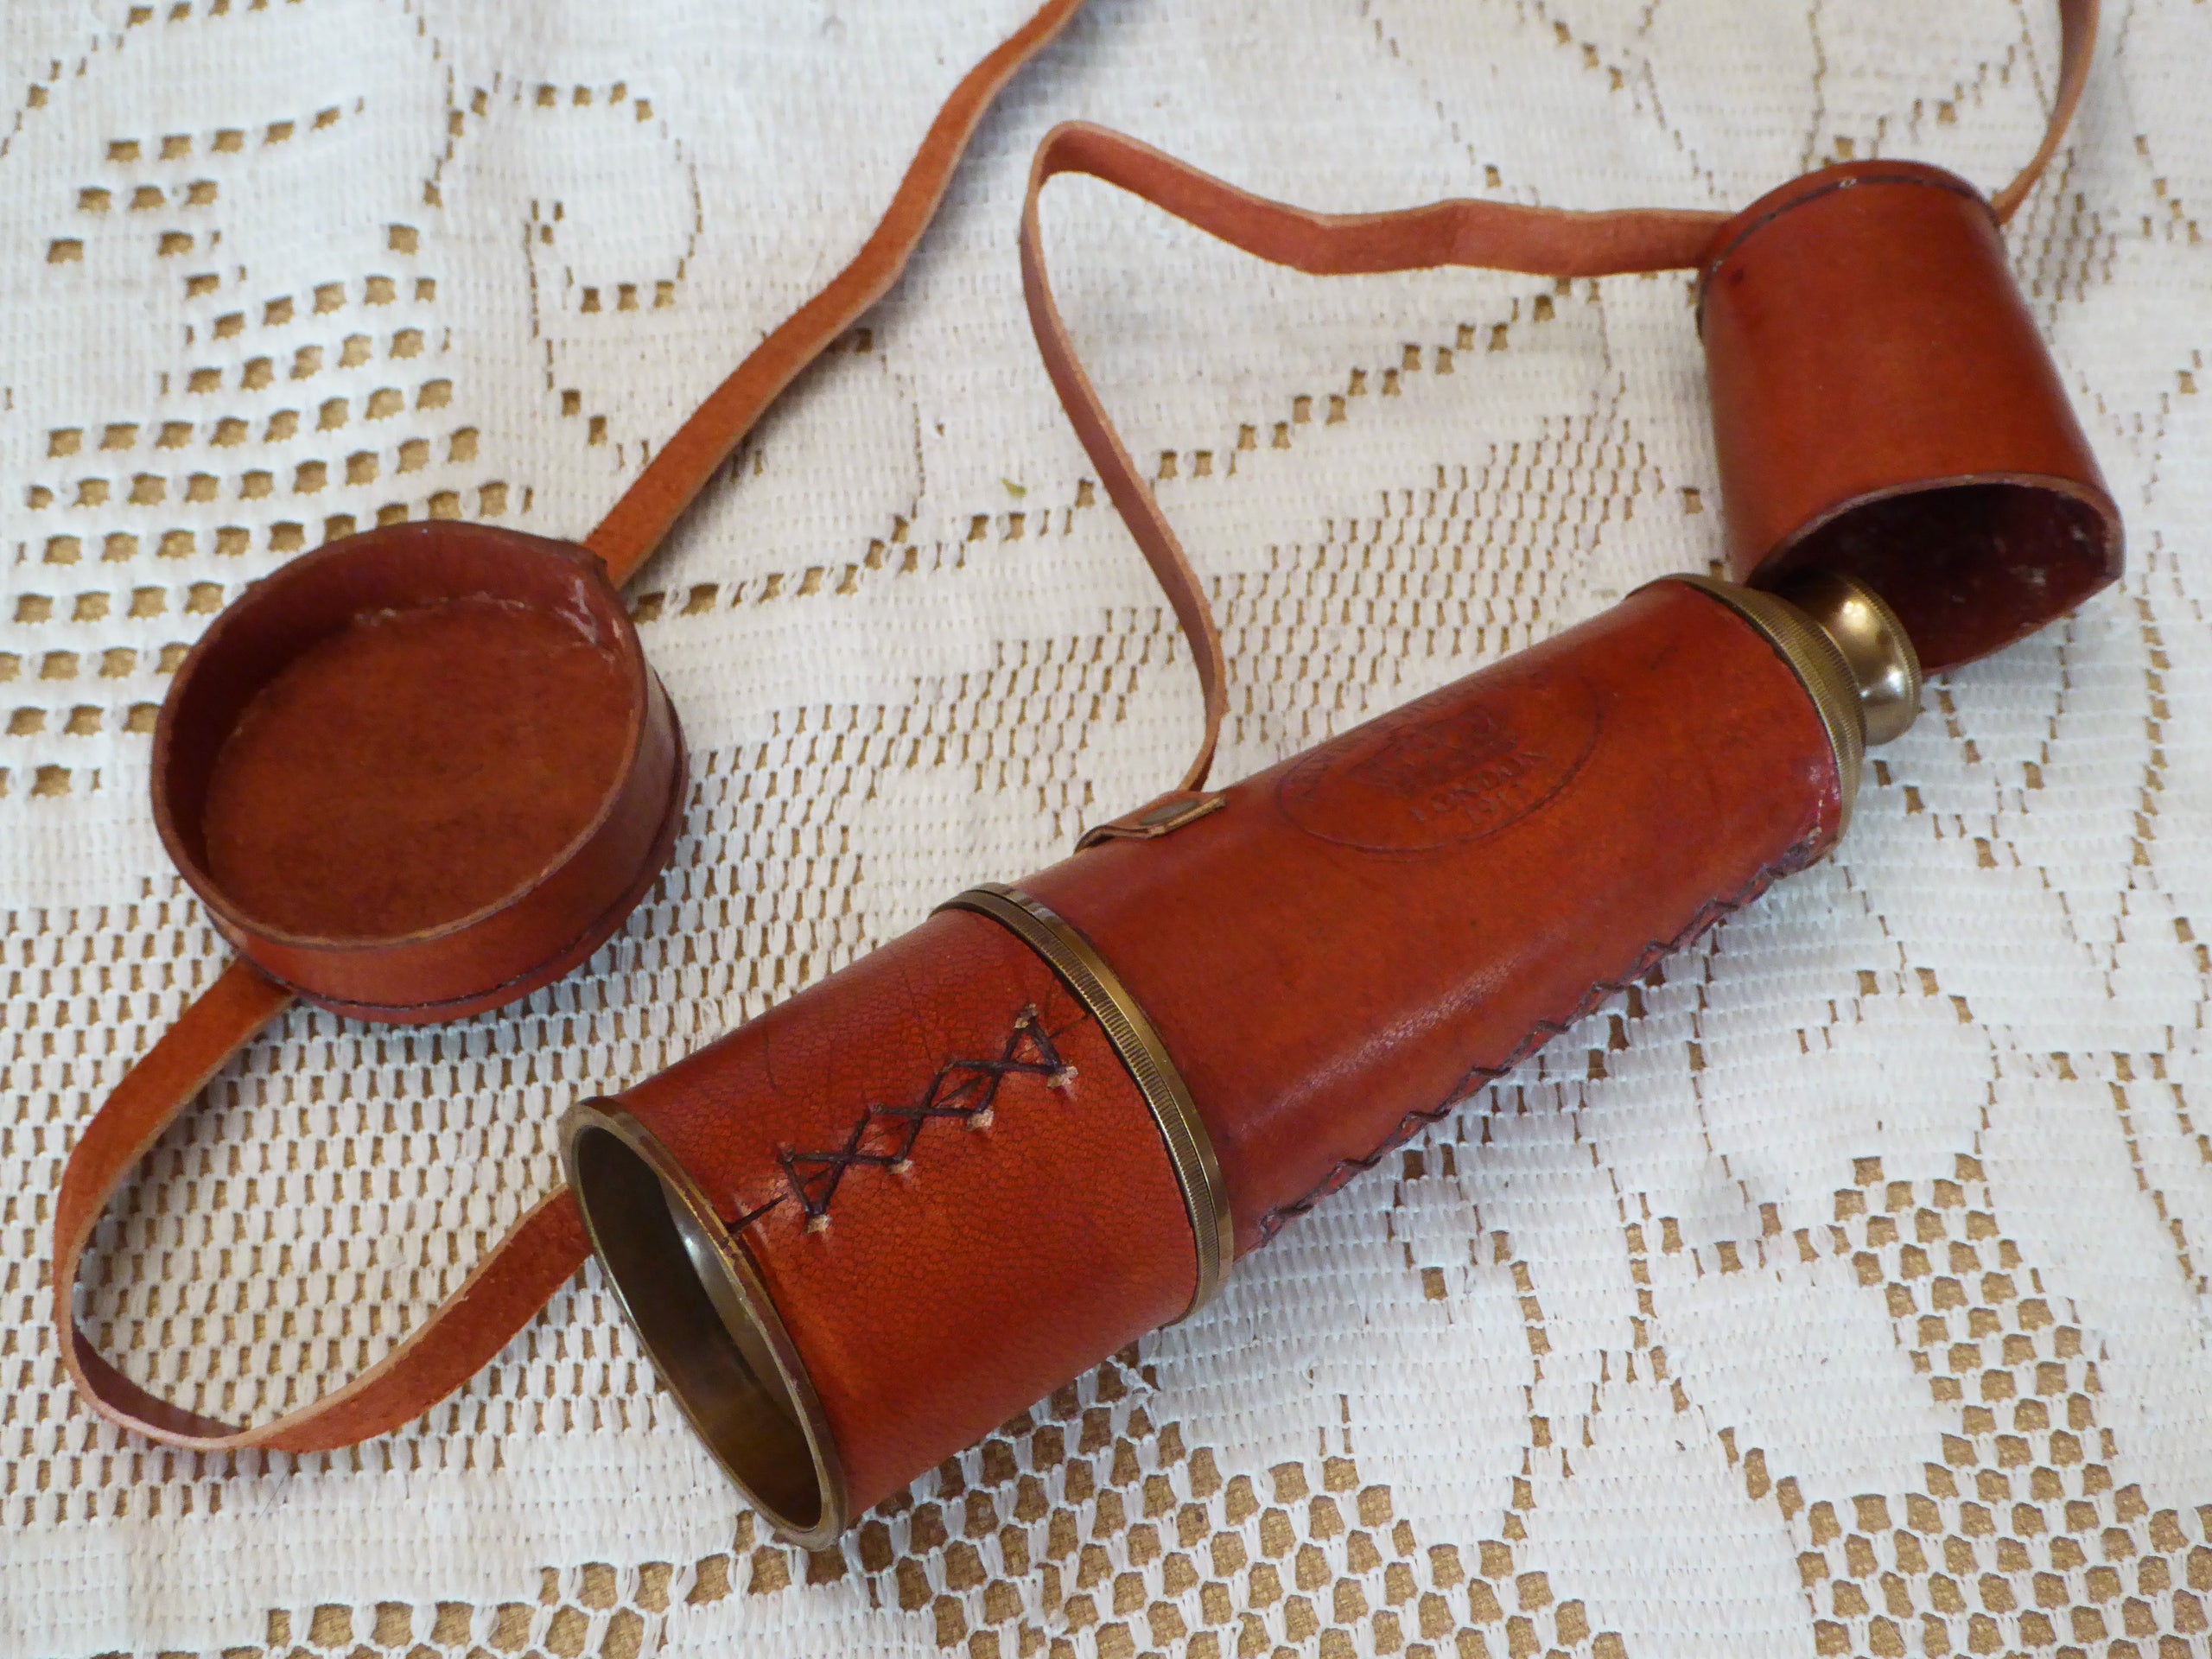 Brass & Leather Pirate Spyglass Scope